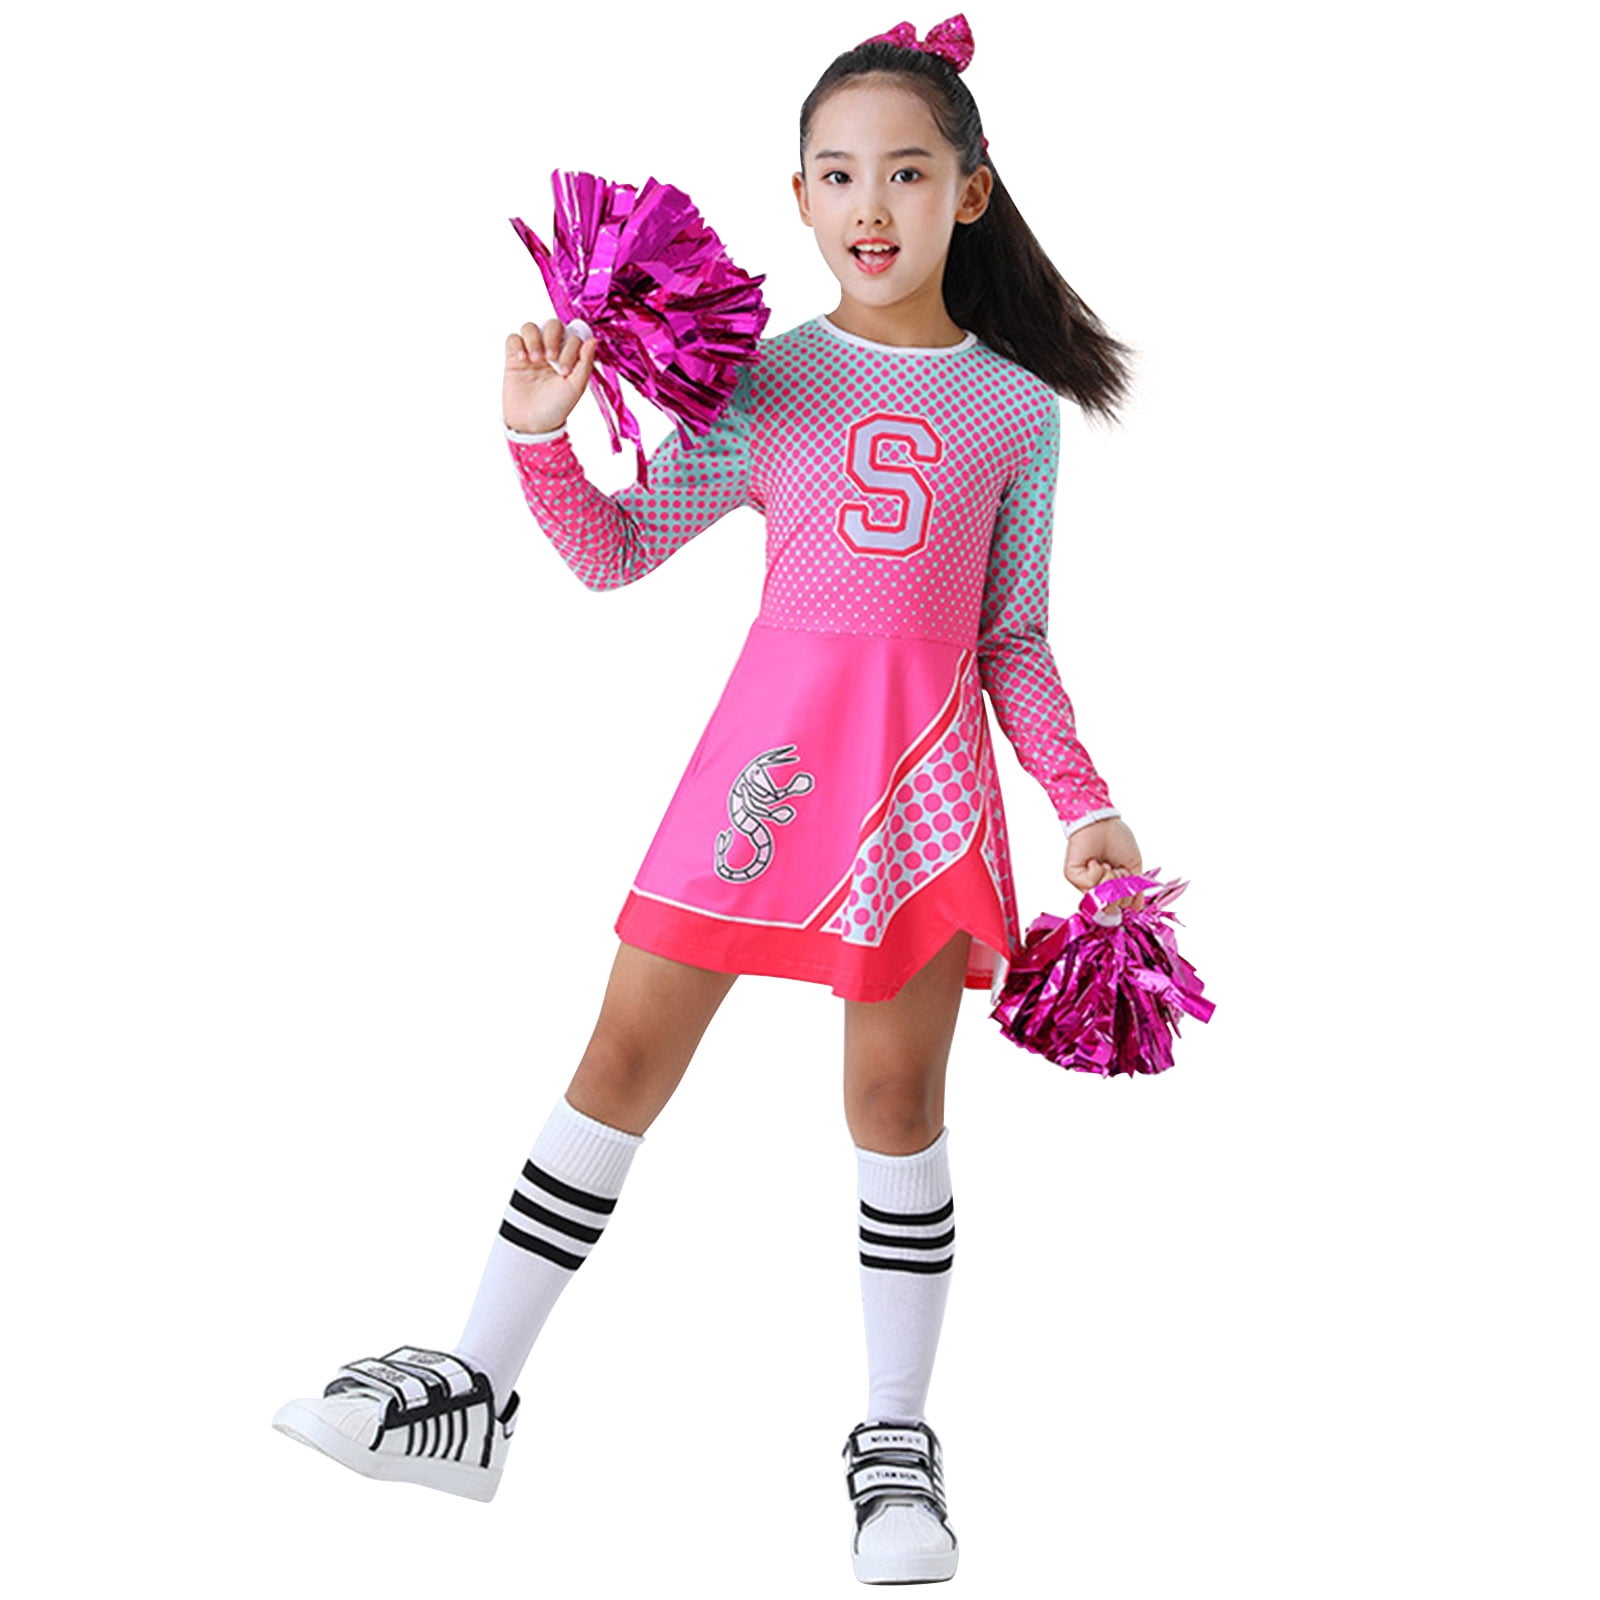 World Book Day Costume Girls Dresses Cheerleader Party Dress up Fancy Dress Cheerleader with Pom Poms